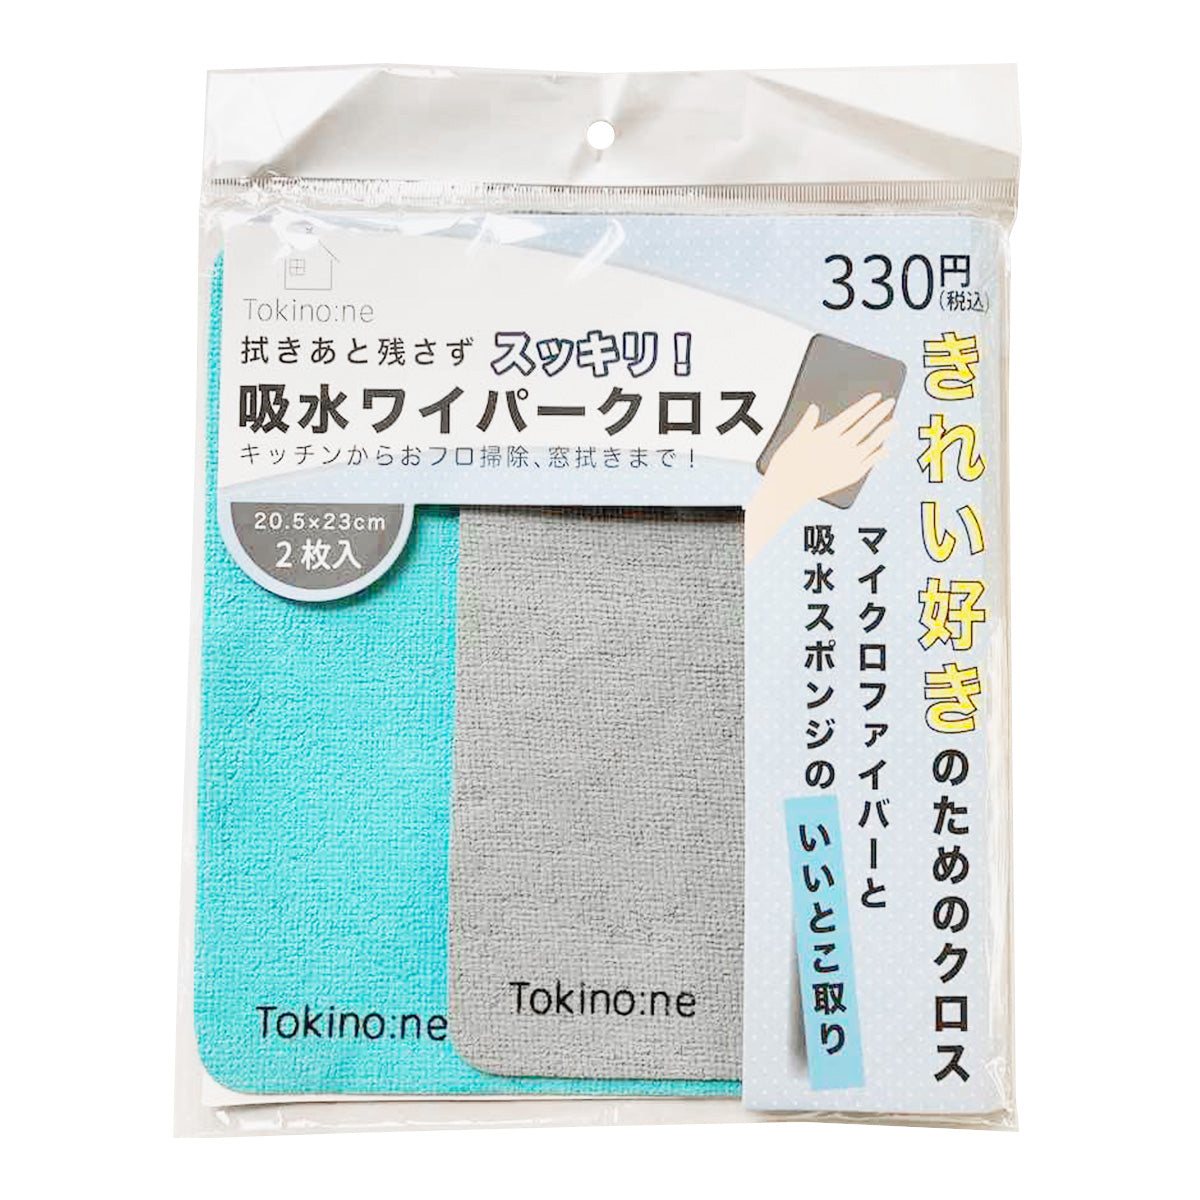 【OUTLET】ダスター クロス 雑巾 Tokinone PB.吸水ワイパークロス 2枚組 055011